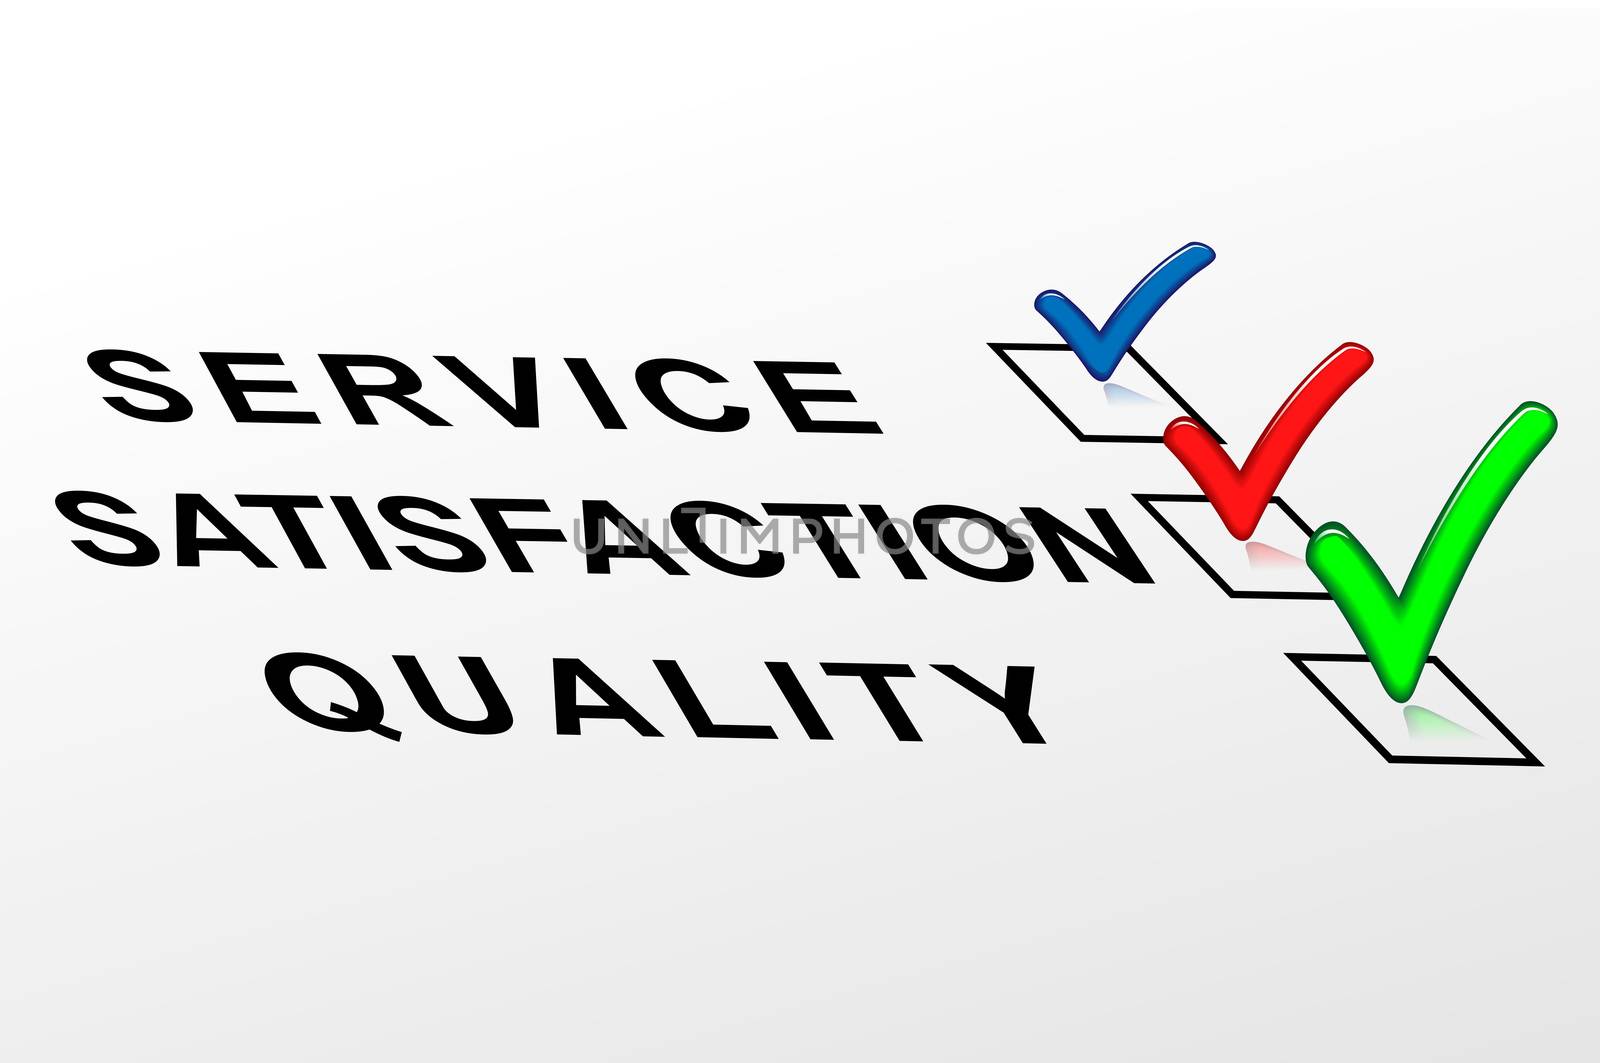 Label quality,satisfaction,service by nickylarson974